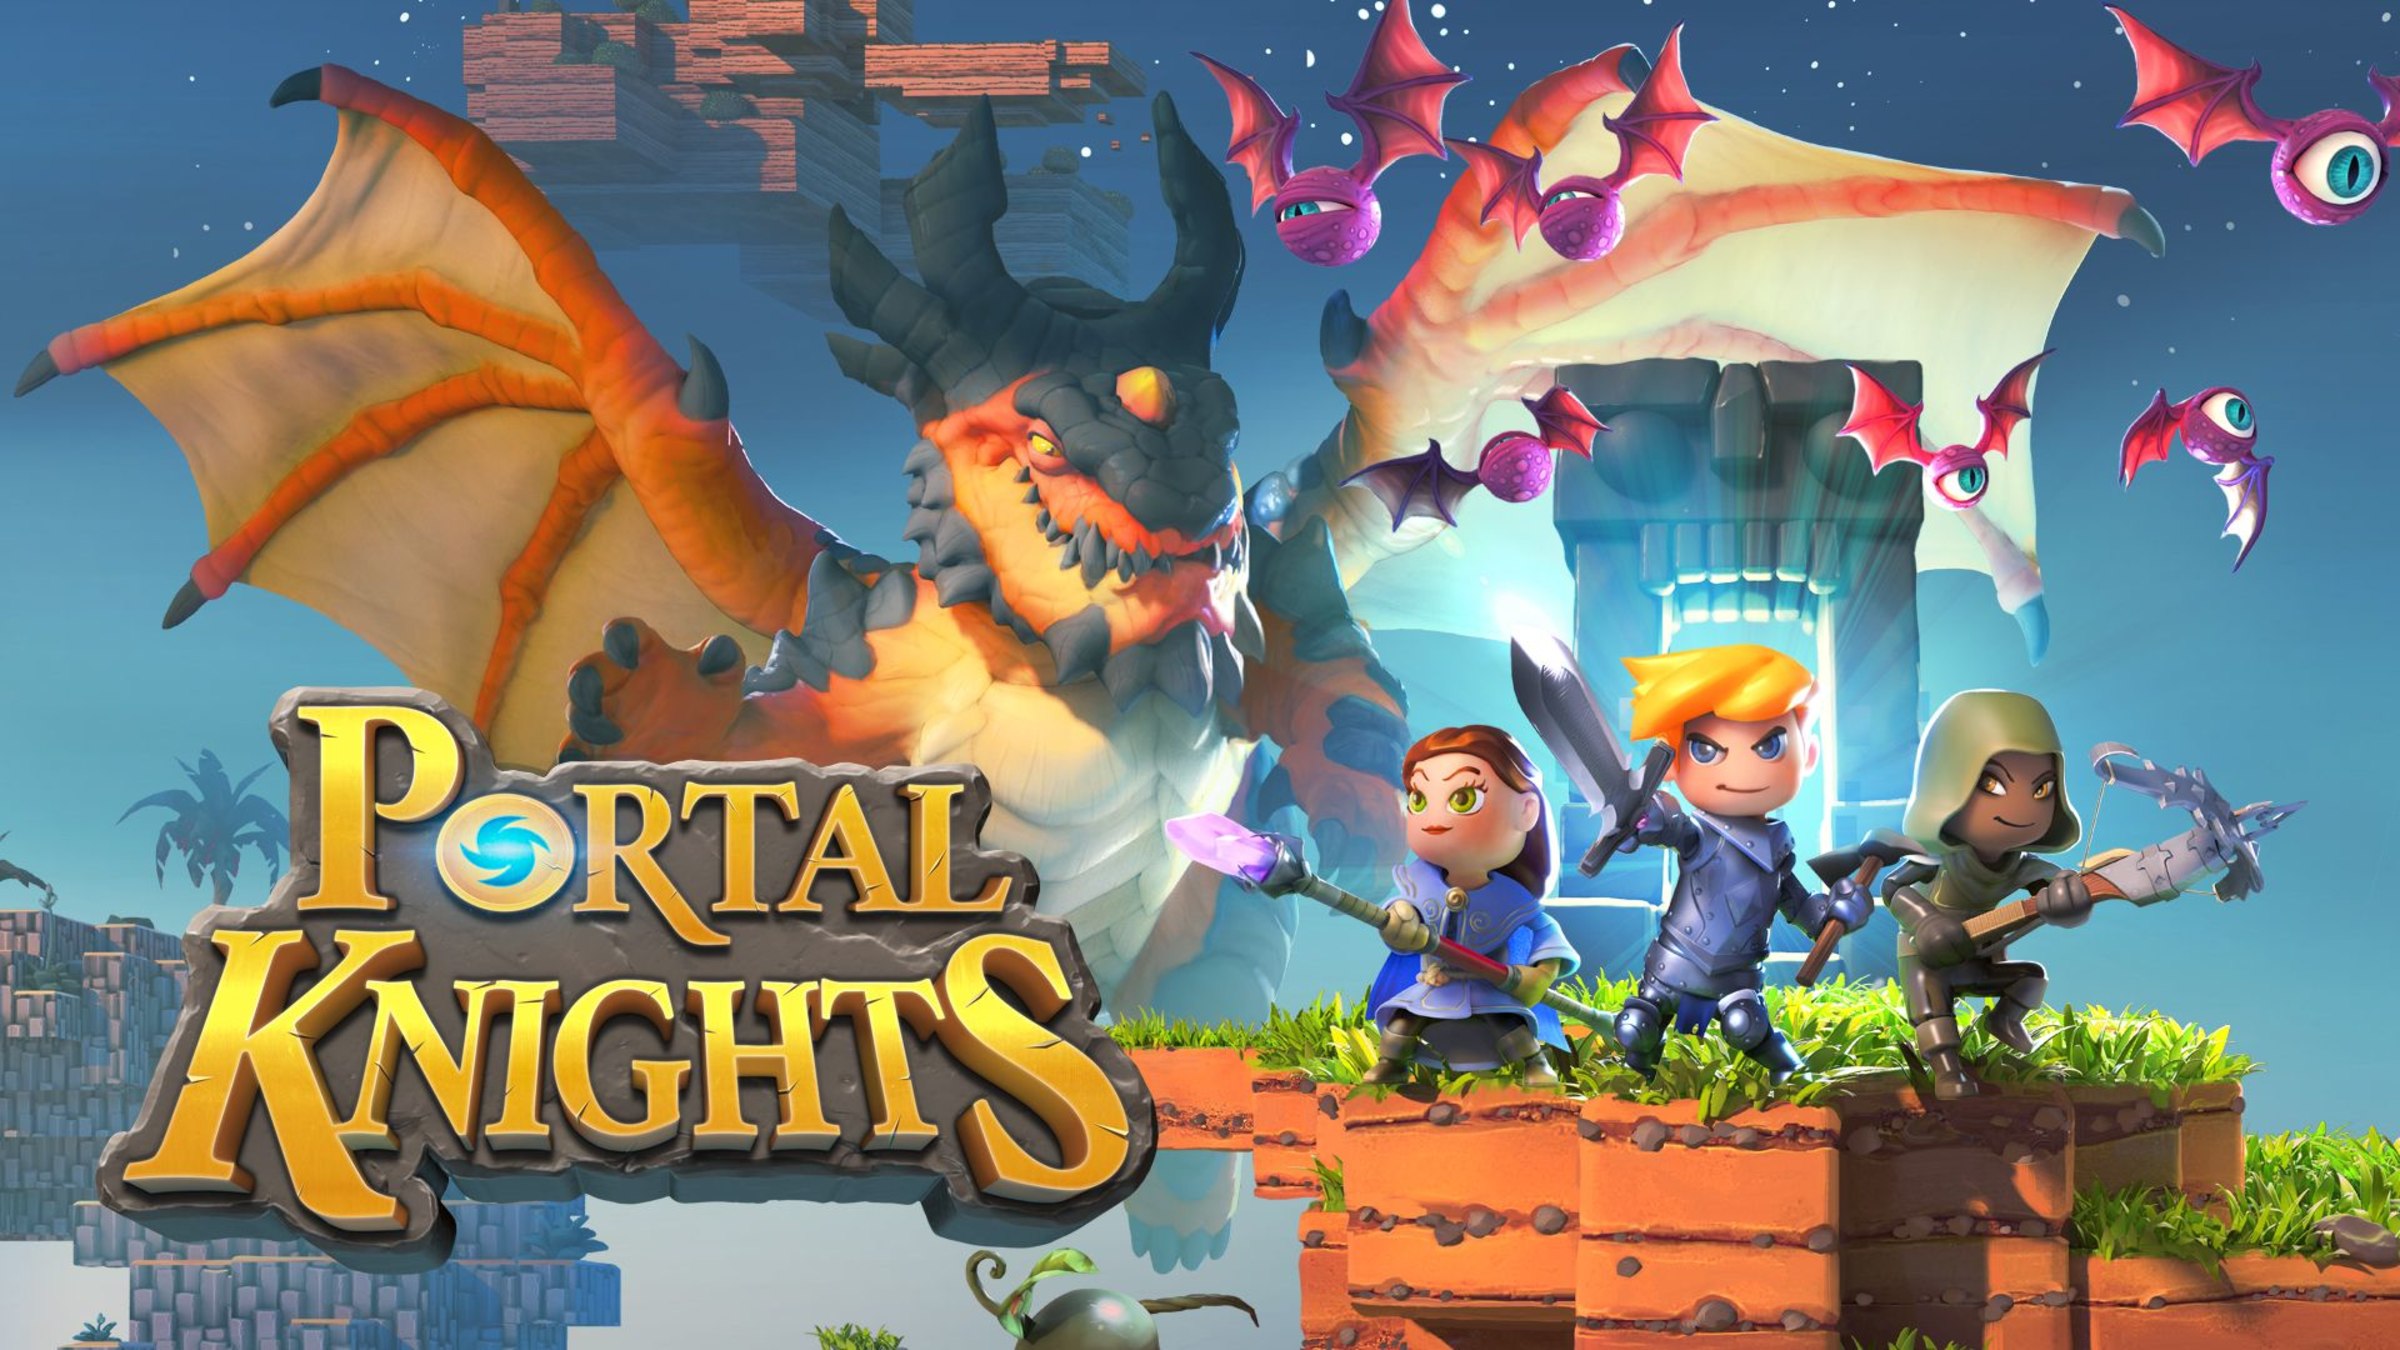 Портал кнайт. Portal Knights. Таблички Portal Knights. Portal Knights villainous. Portal Knights монстры.